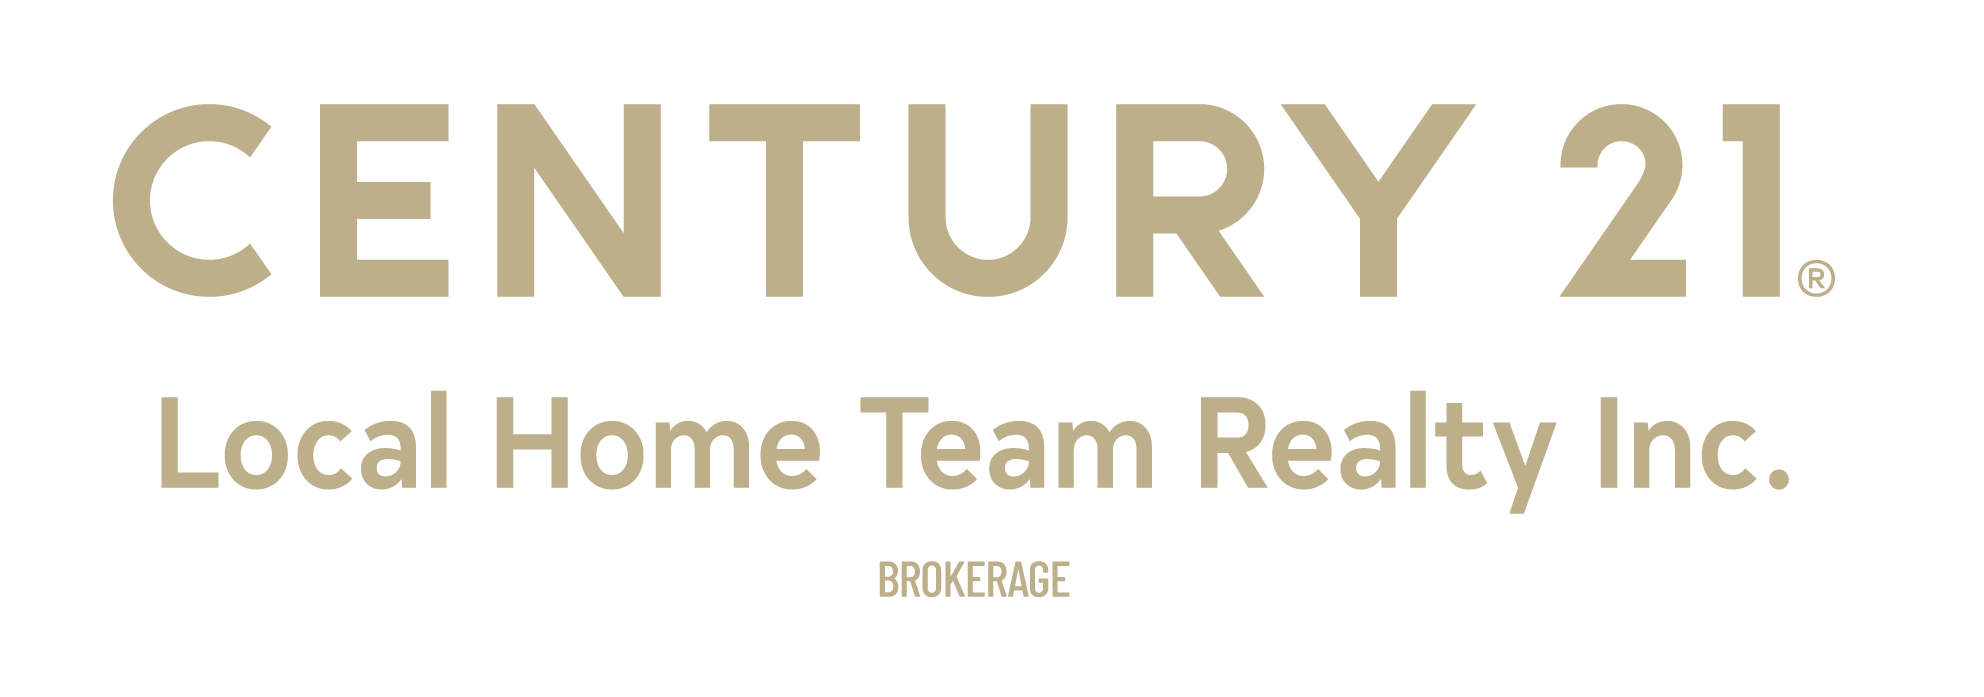 Century 21 Local Home Team Realty Inc.